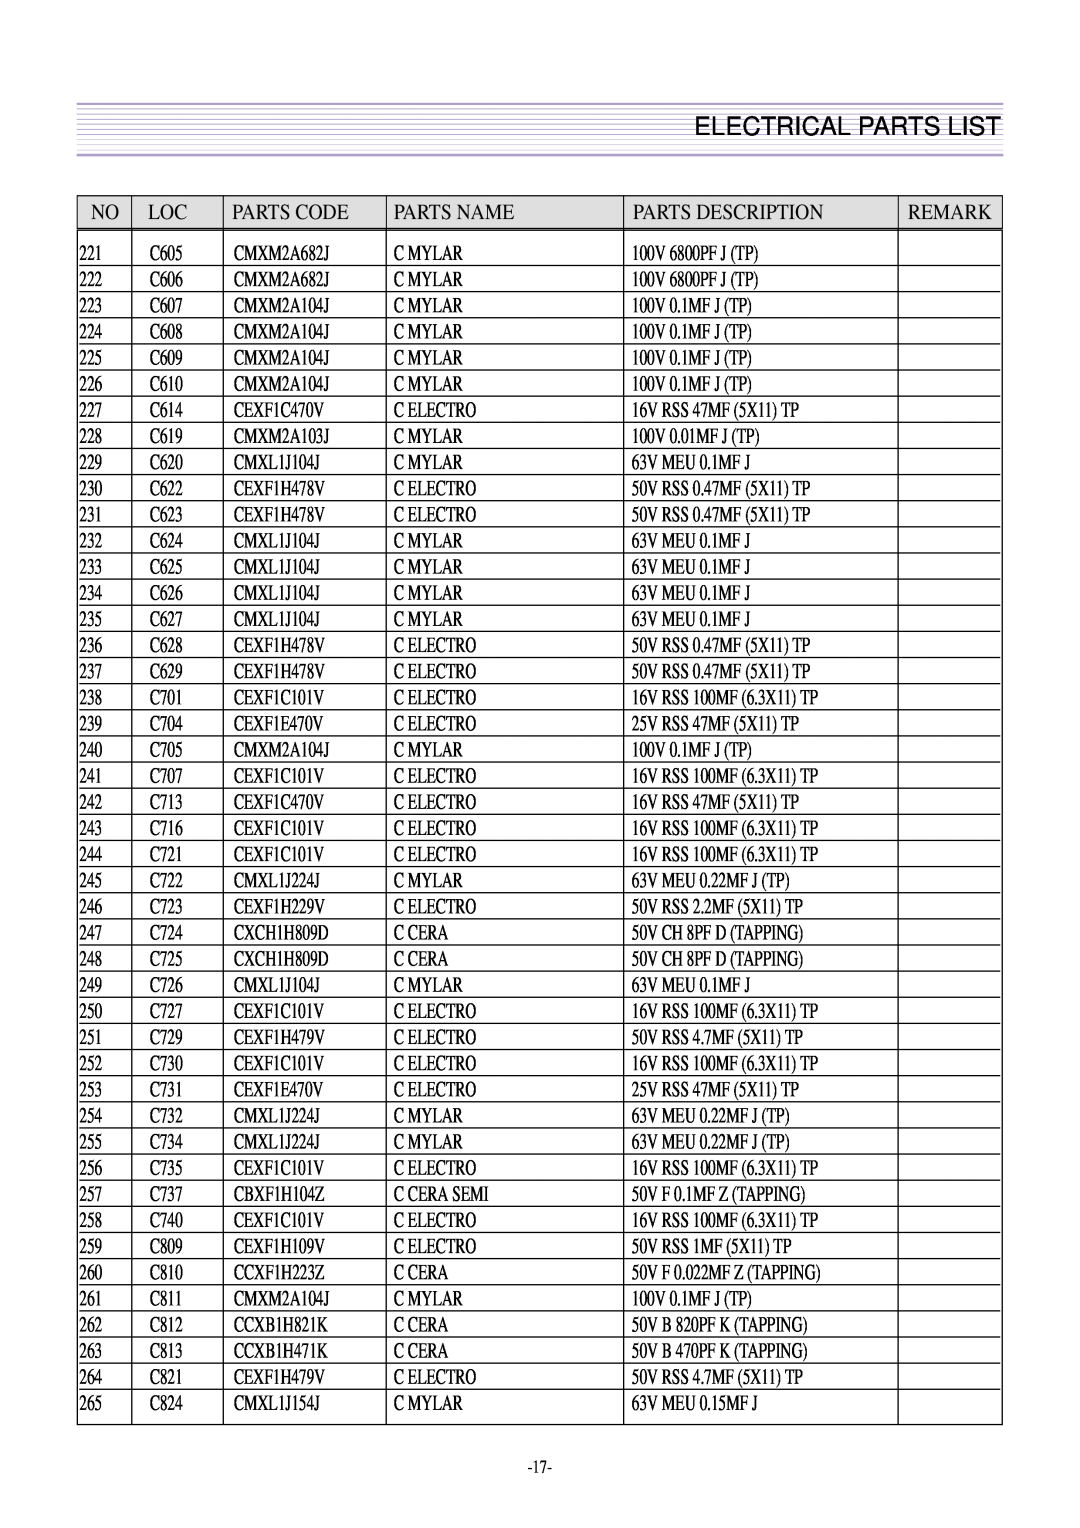 Daewoo CN-401FN, DTQ-29U4SCV, DTQ-29U5SSFV, CN-400FN DTQ-29U1SCV DTQ-29U1SSFV DTQ-29U1SCSV Electrical Parts List 